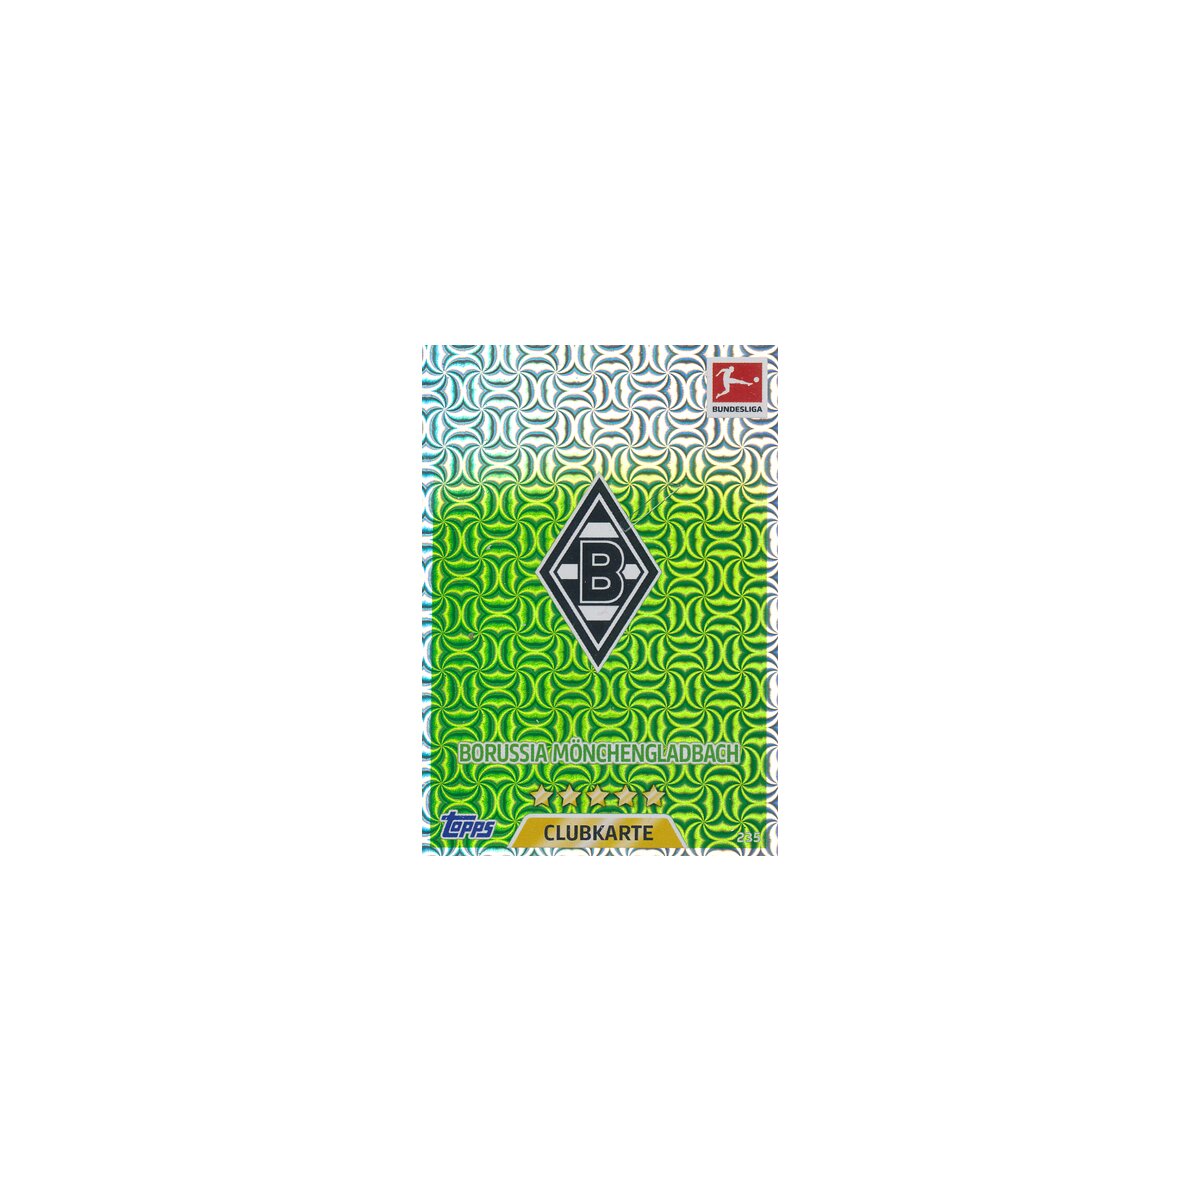 MX 235 - Club-Karte Borussia Mönchengladbach, 1,29